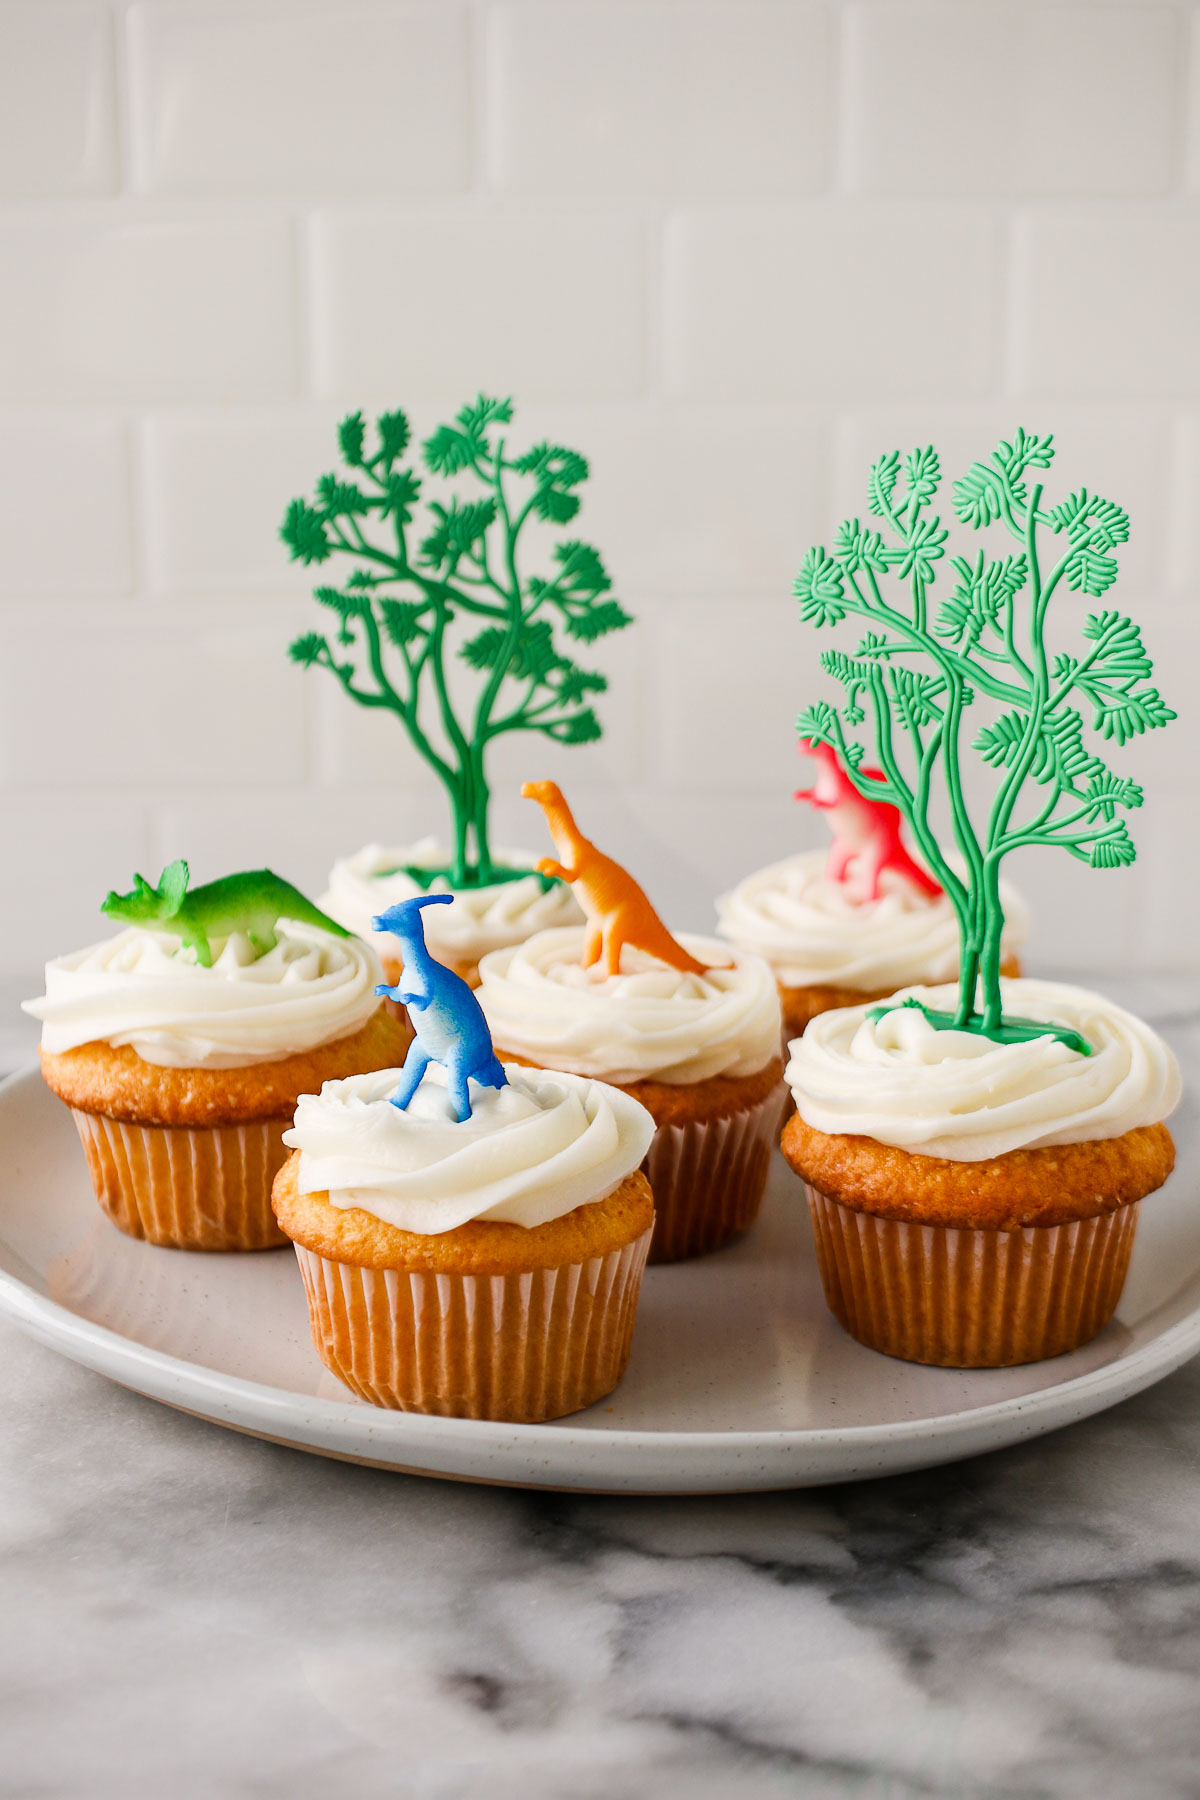 dinosaur birthday party food ideas